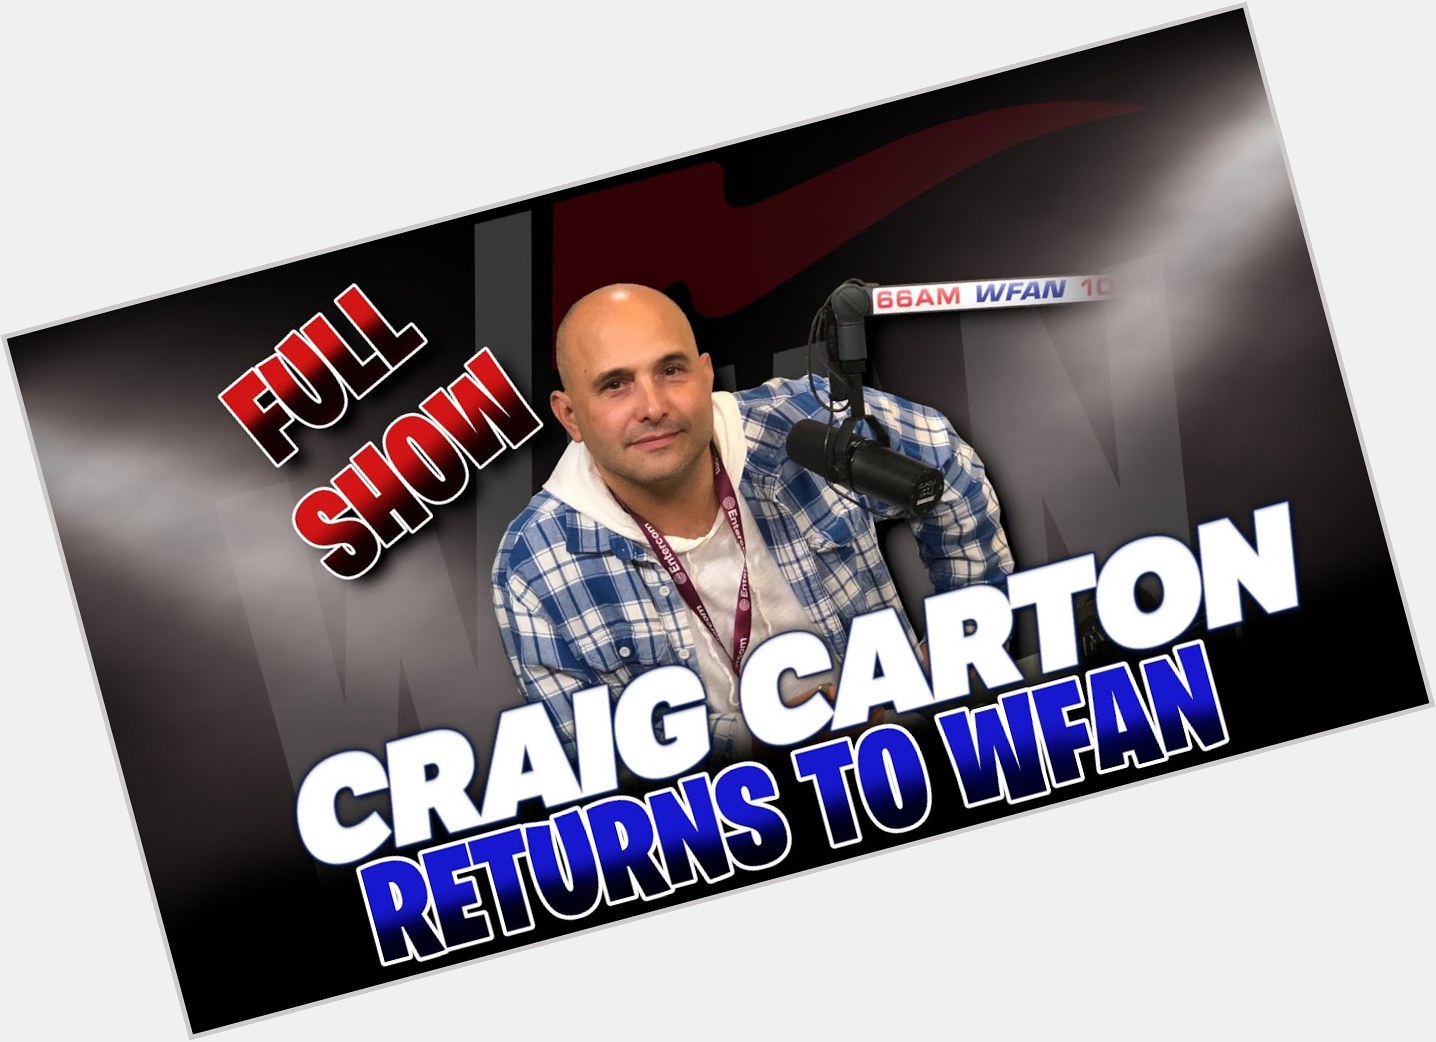 Craig Carton dating 2